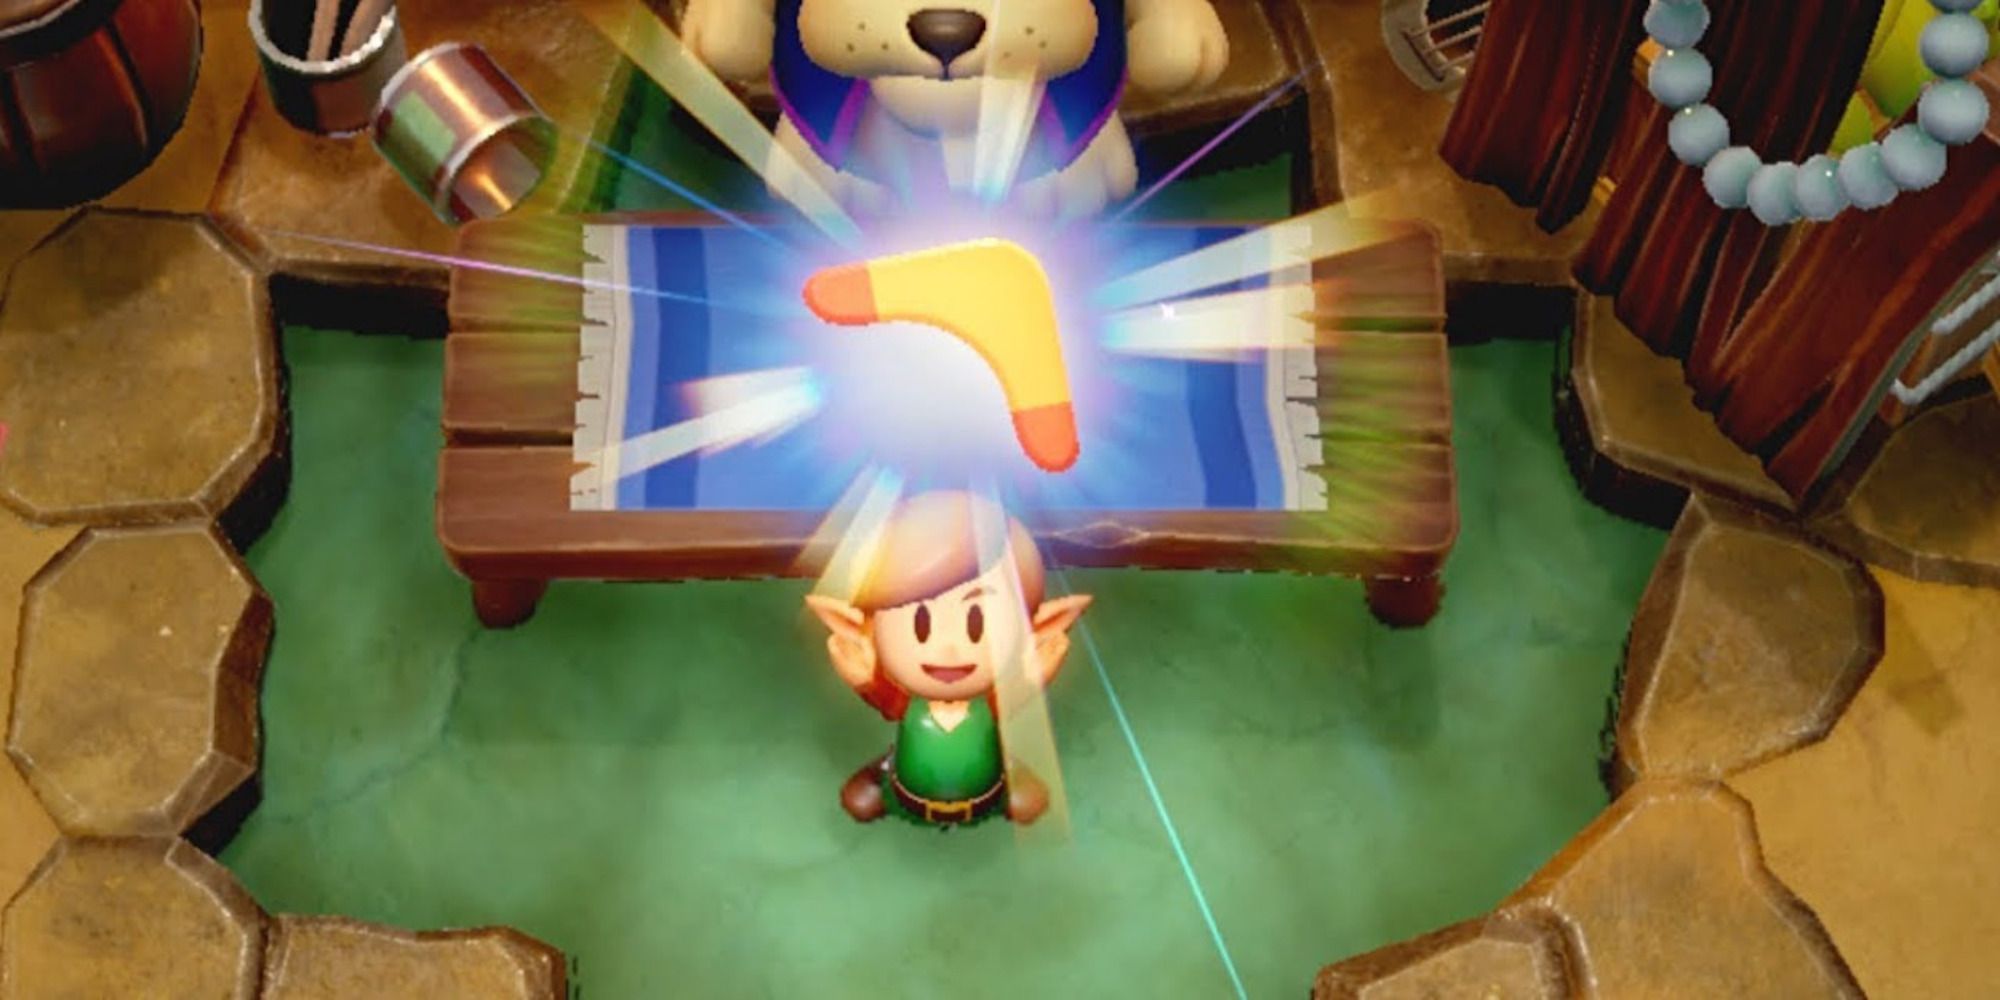 Getting the boomerang in Link's Awakening